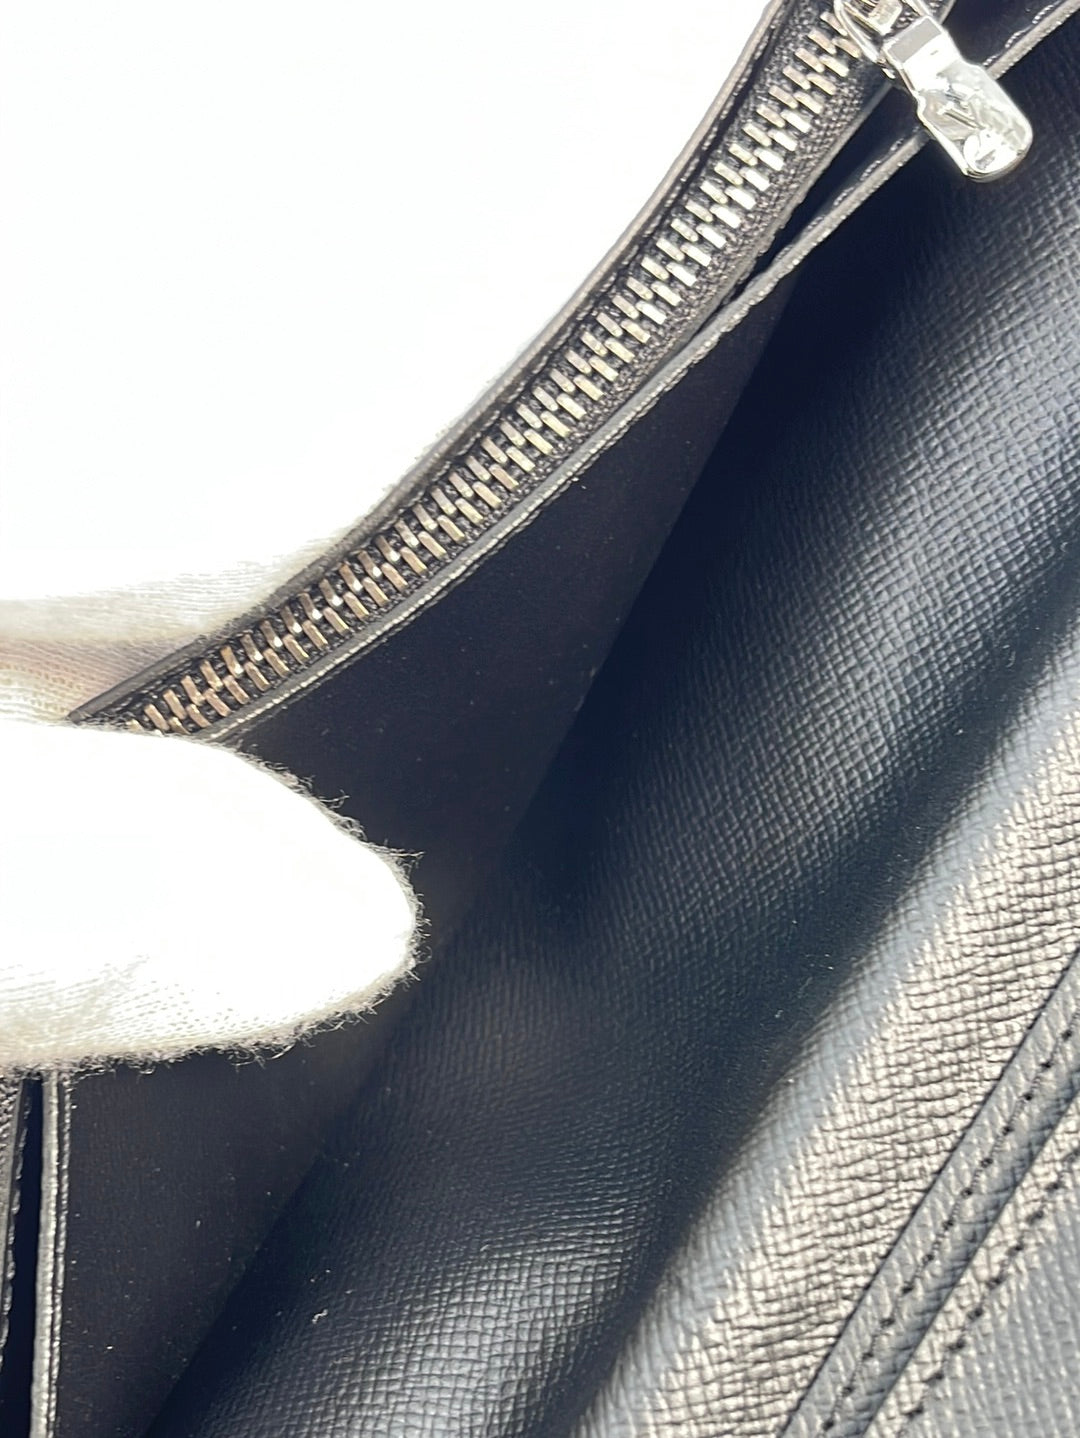 Louis Vuitton Nomade Leather Brazza Bi-fold Long Wallet Men Brown Q1899